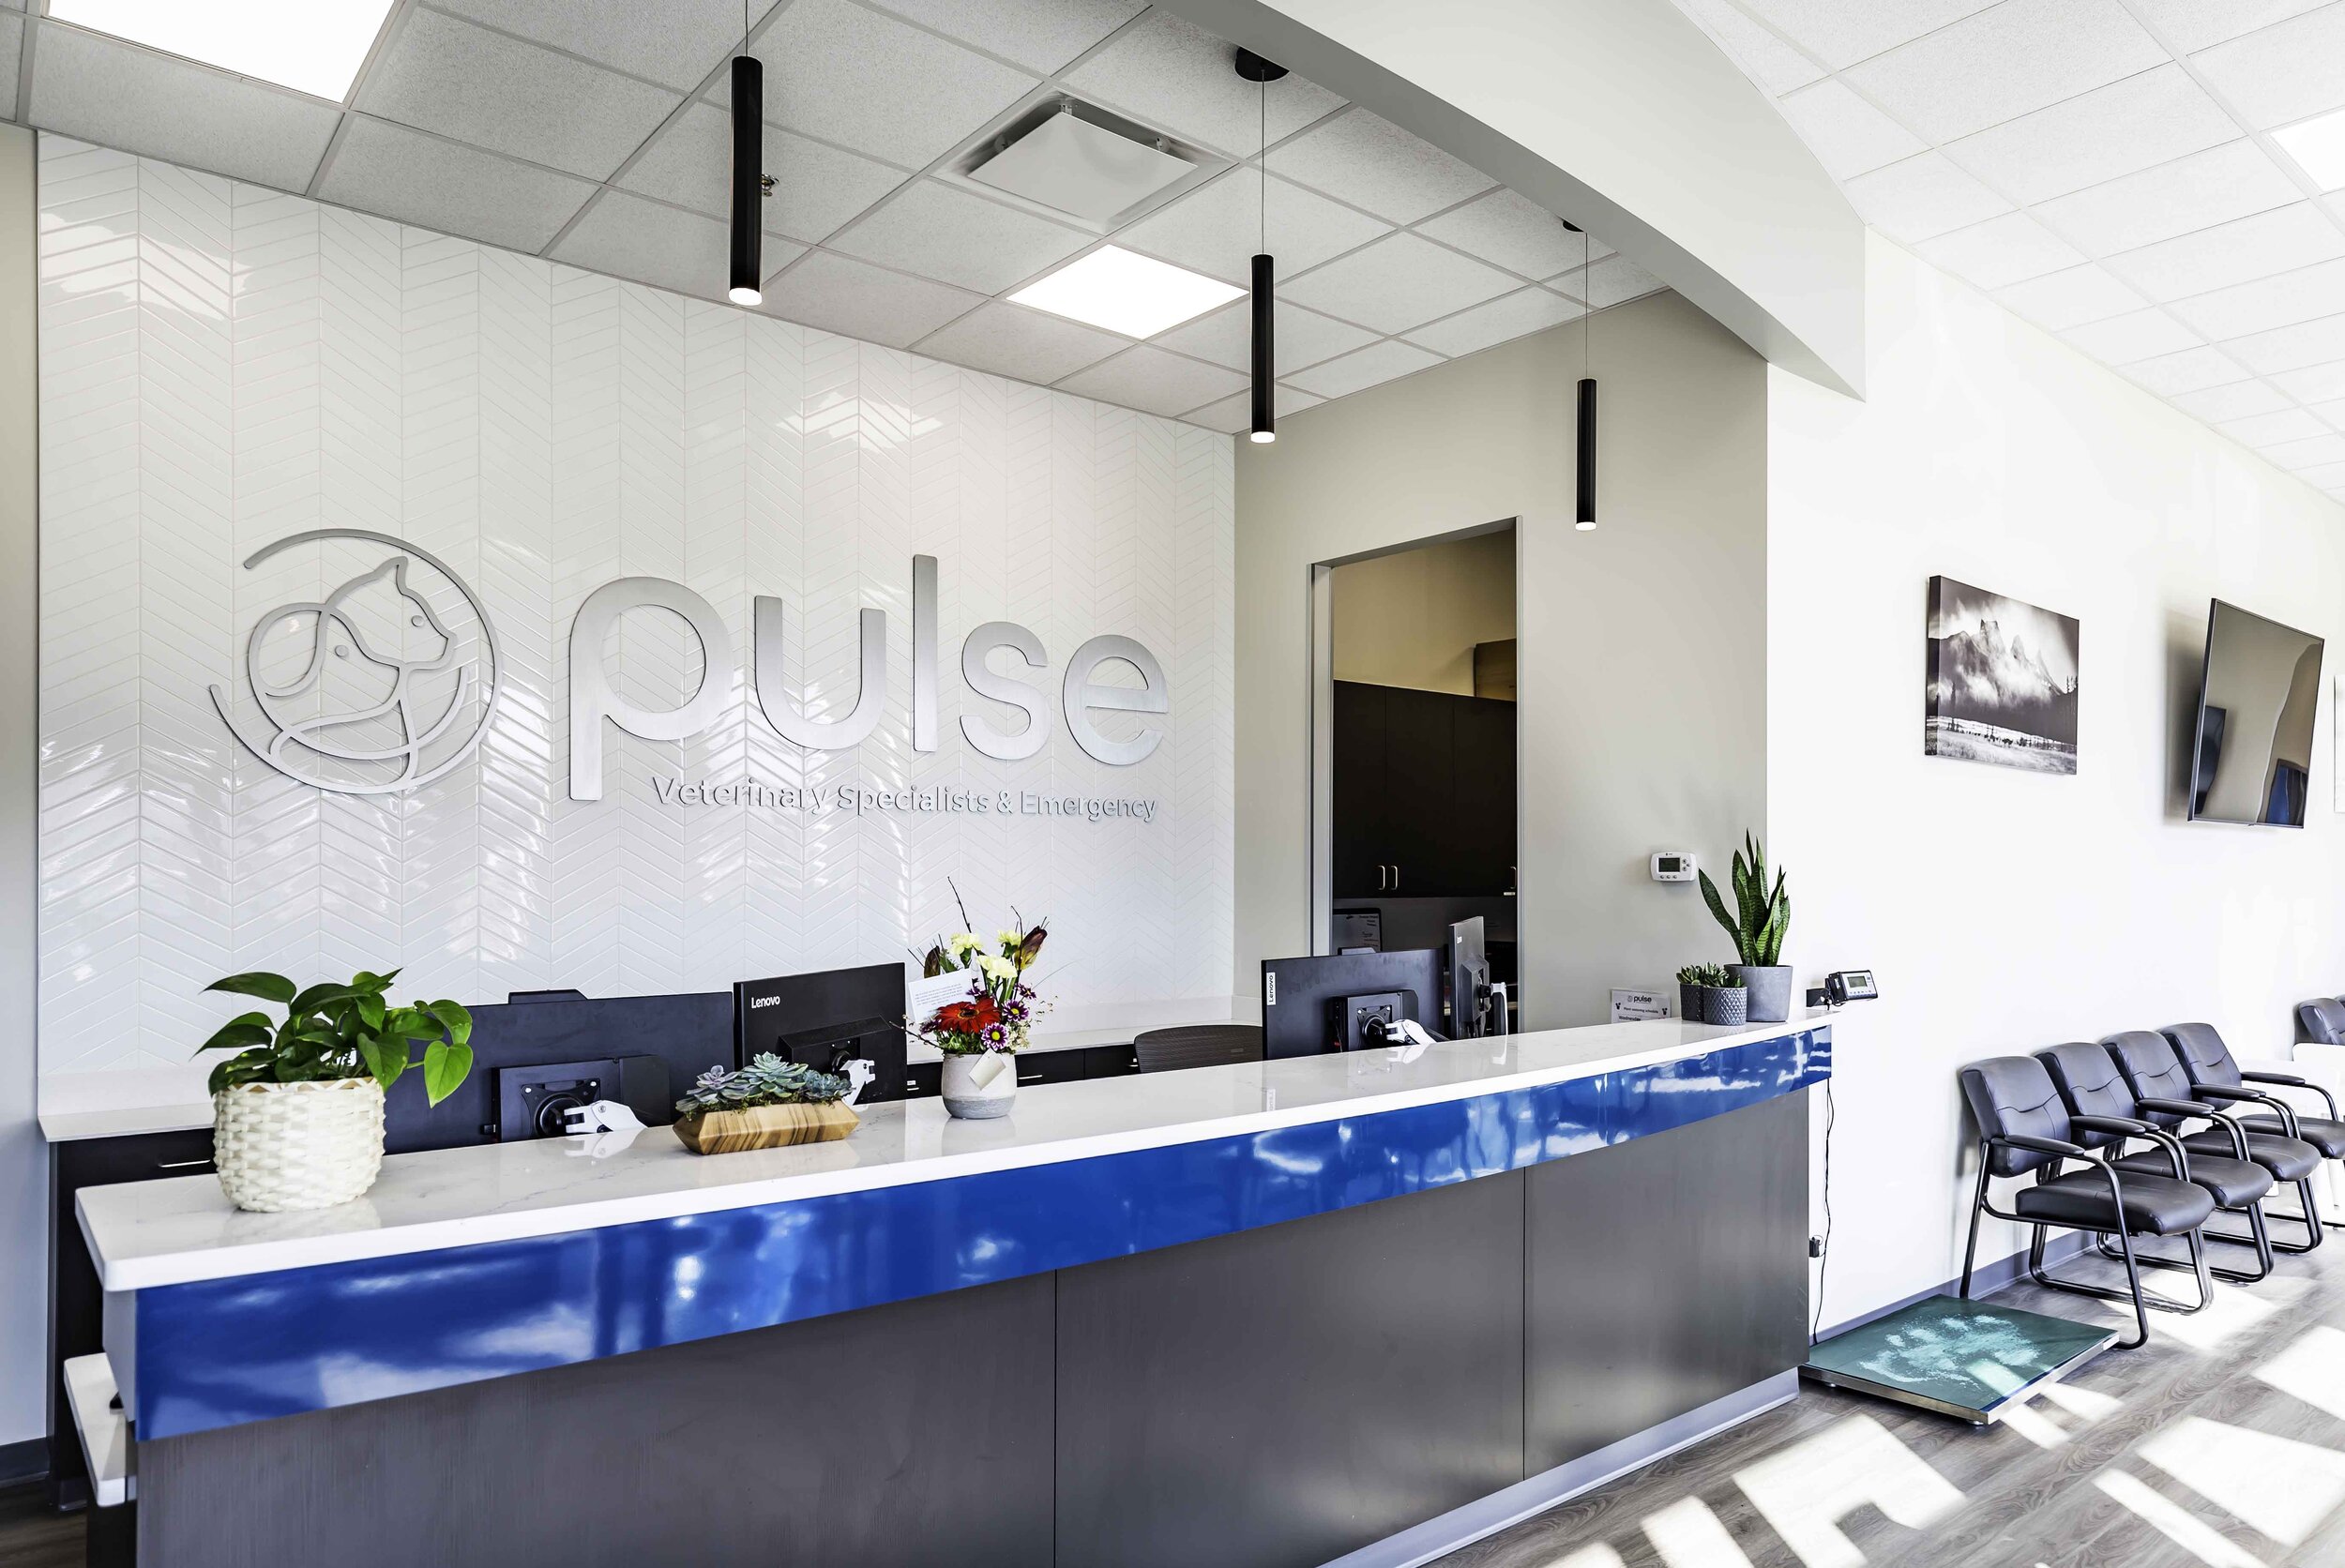 Pulse Vet Clinic April 2020.jpg